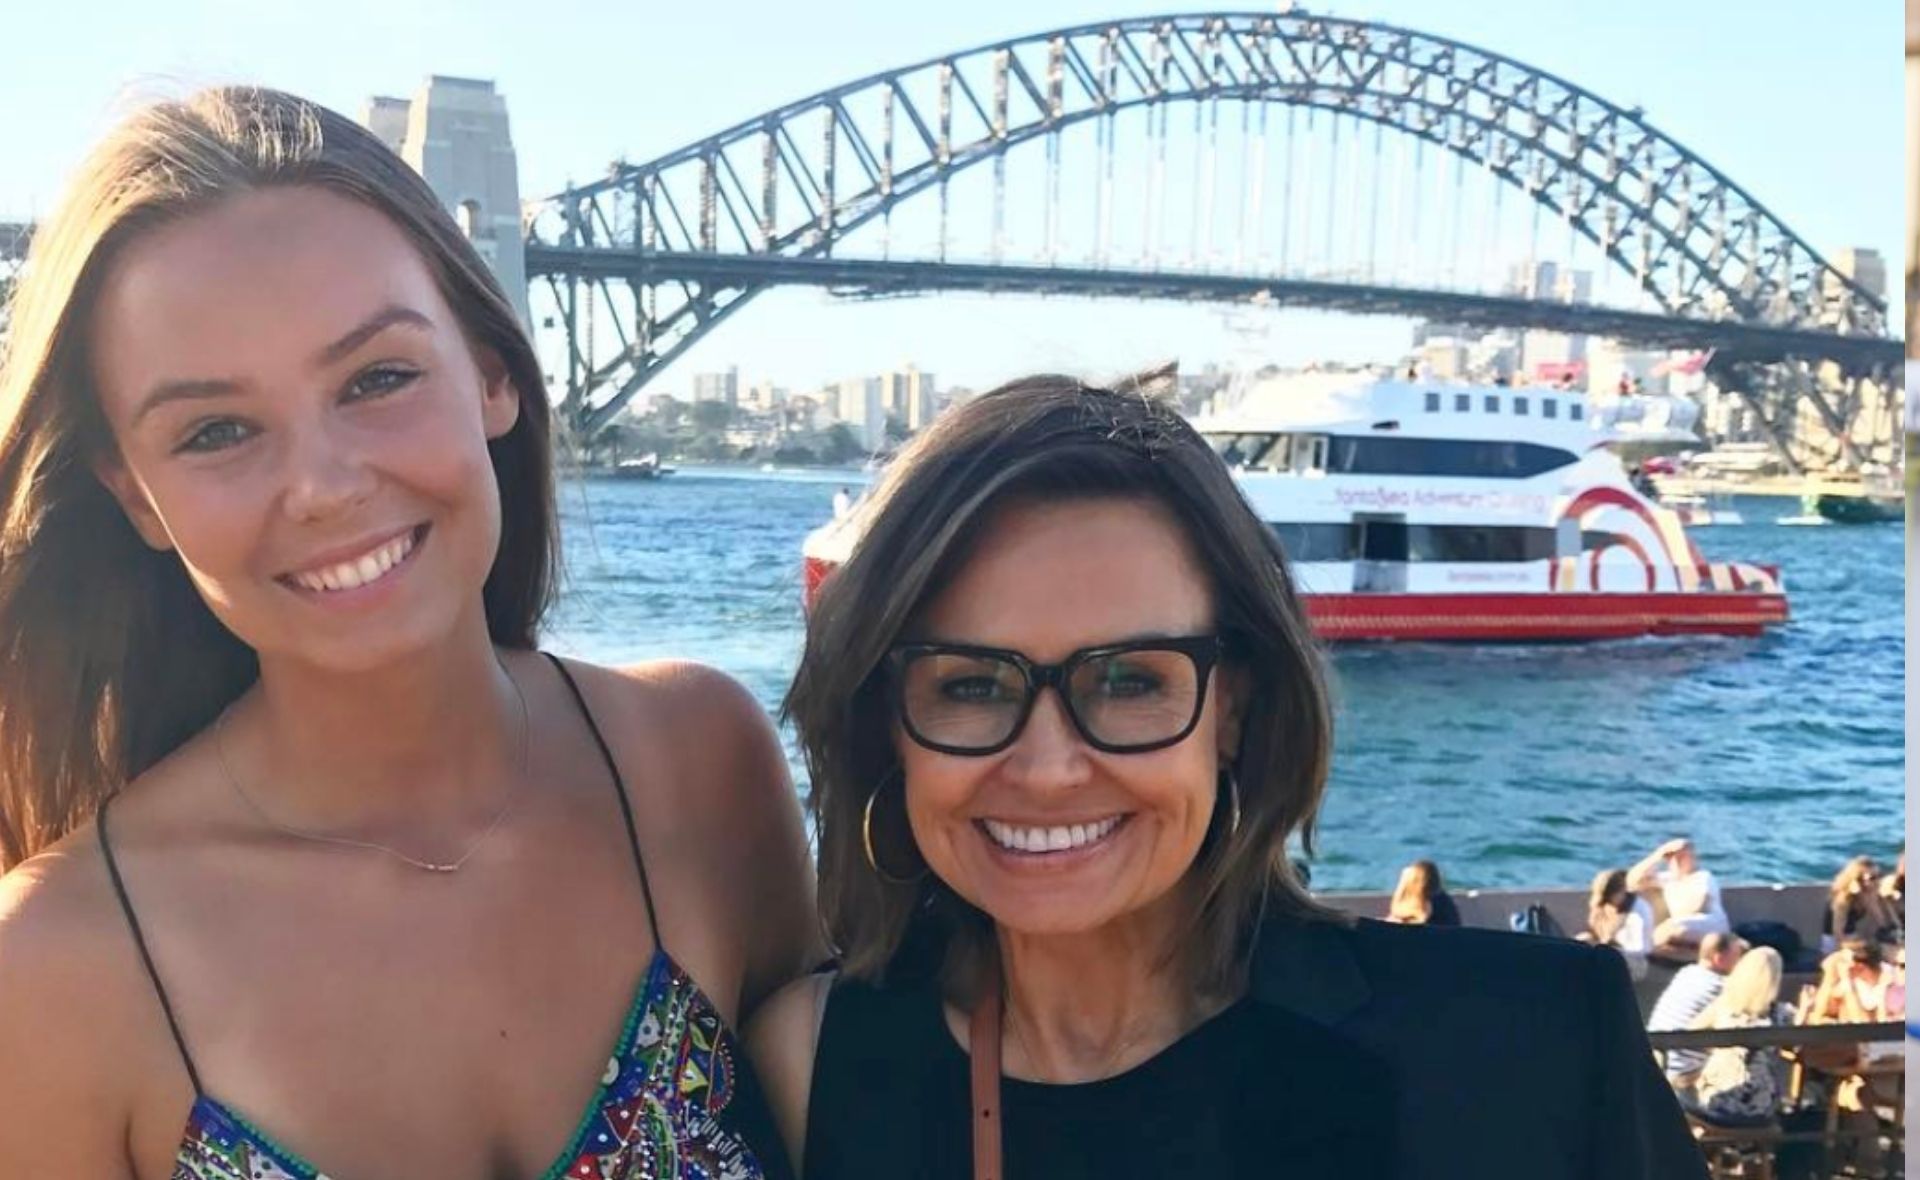 Proud mum Lisa Wilkinson shares her daughter Billi FitzSimons’ important decision amid Sydney’s Covid crisis